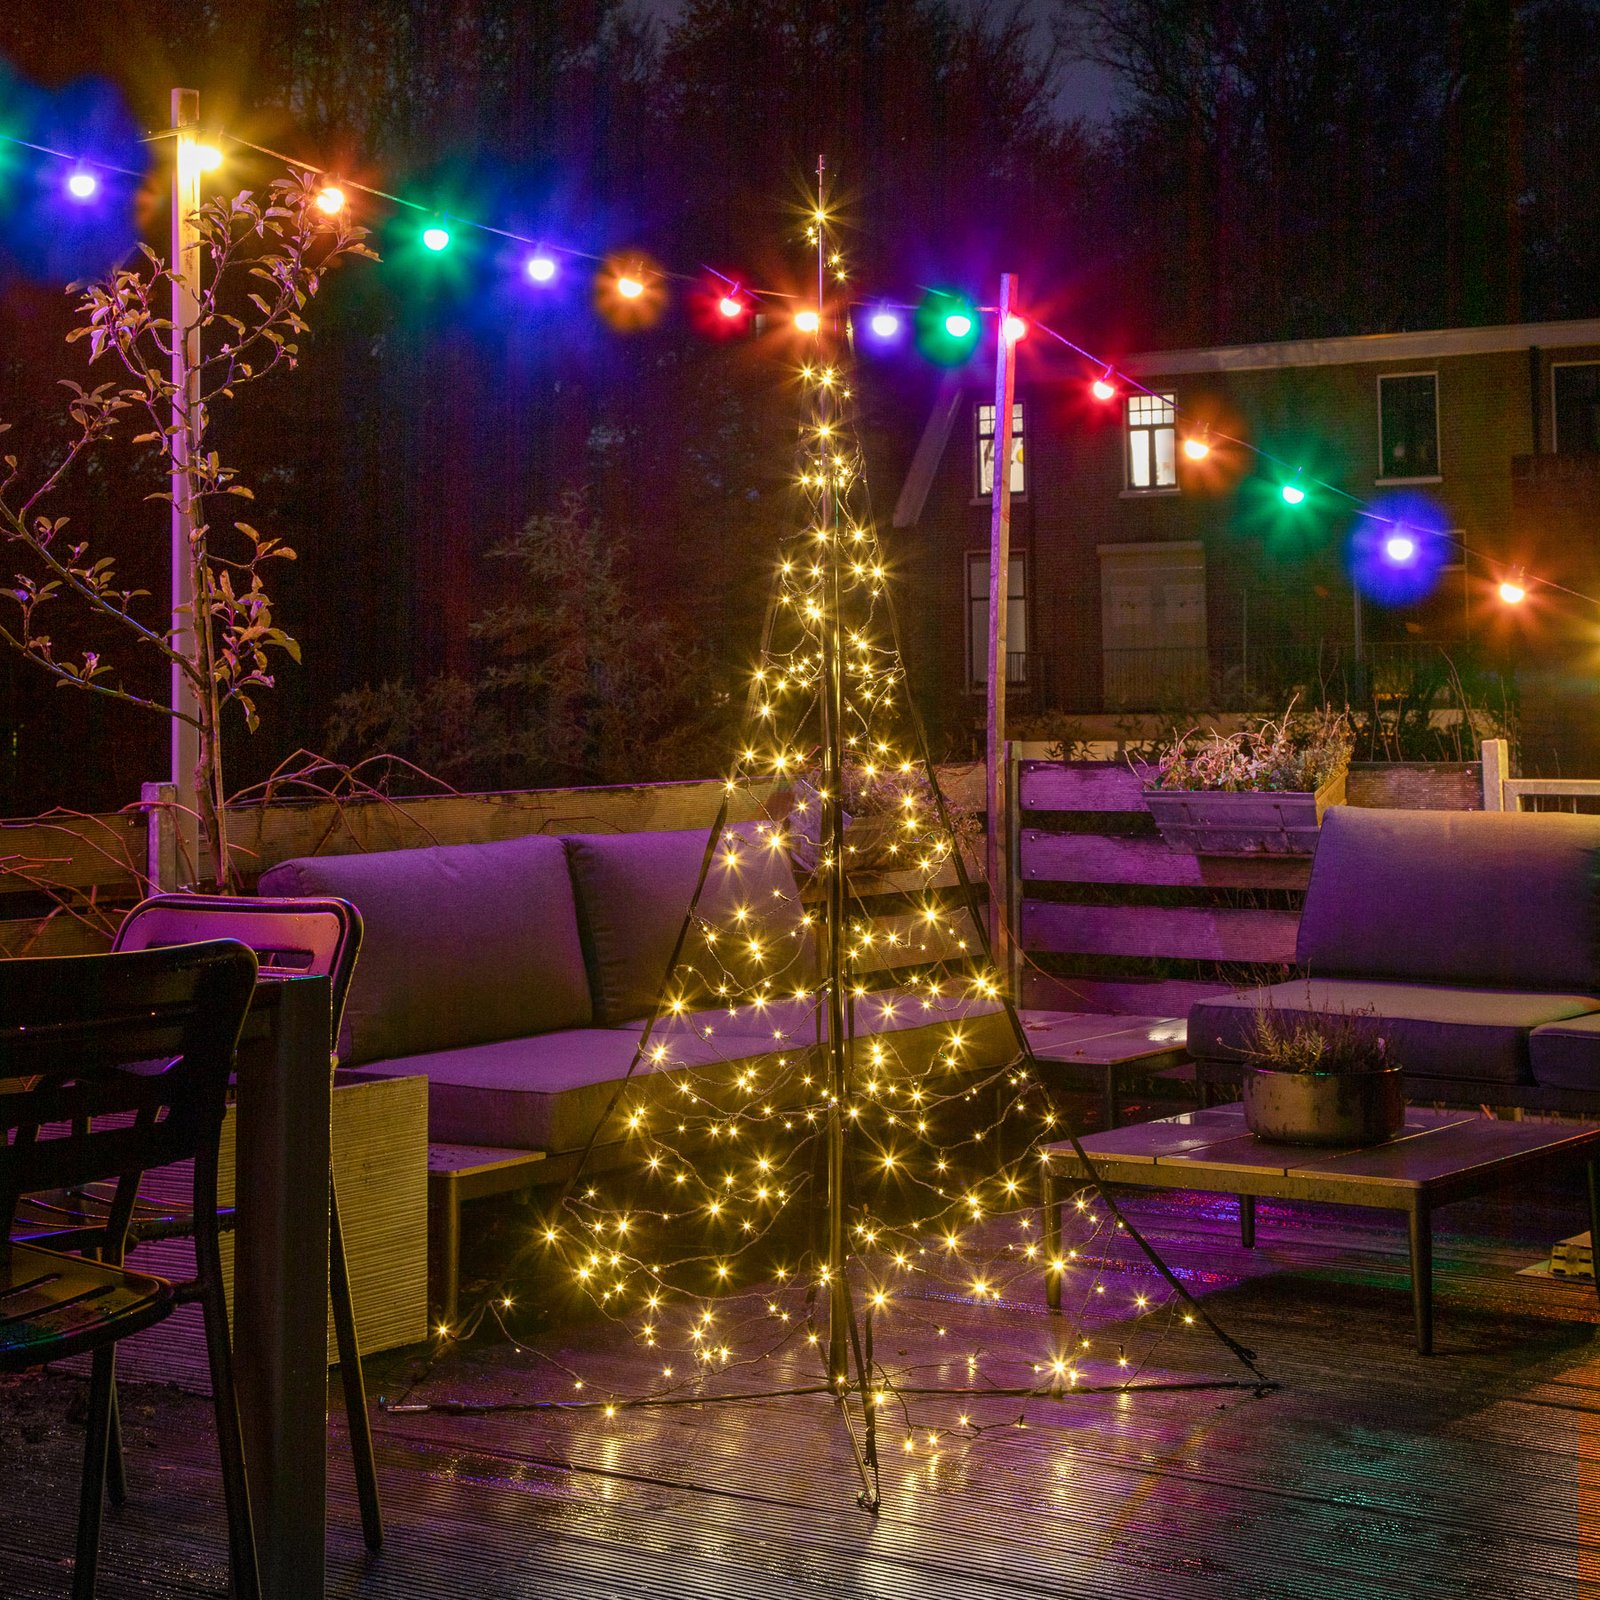 Fairybell albero Natale a palo, 240 LED, 200cm